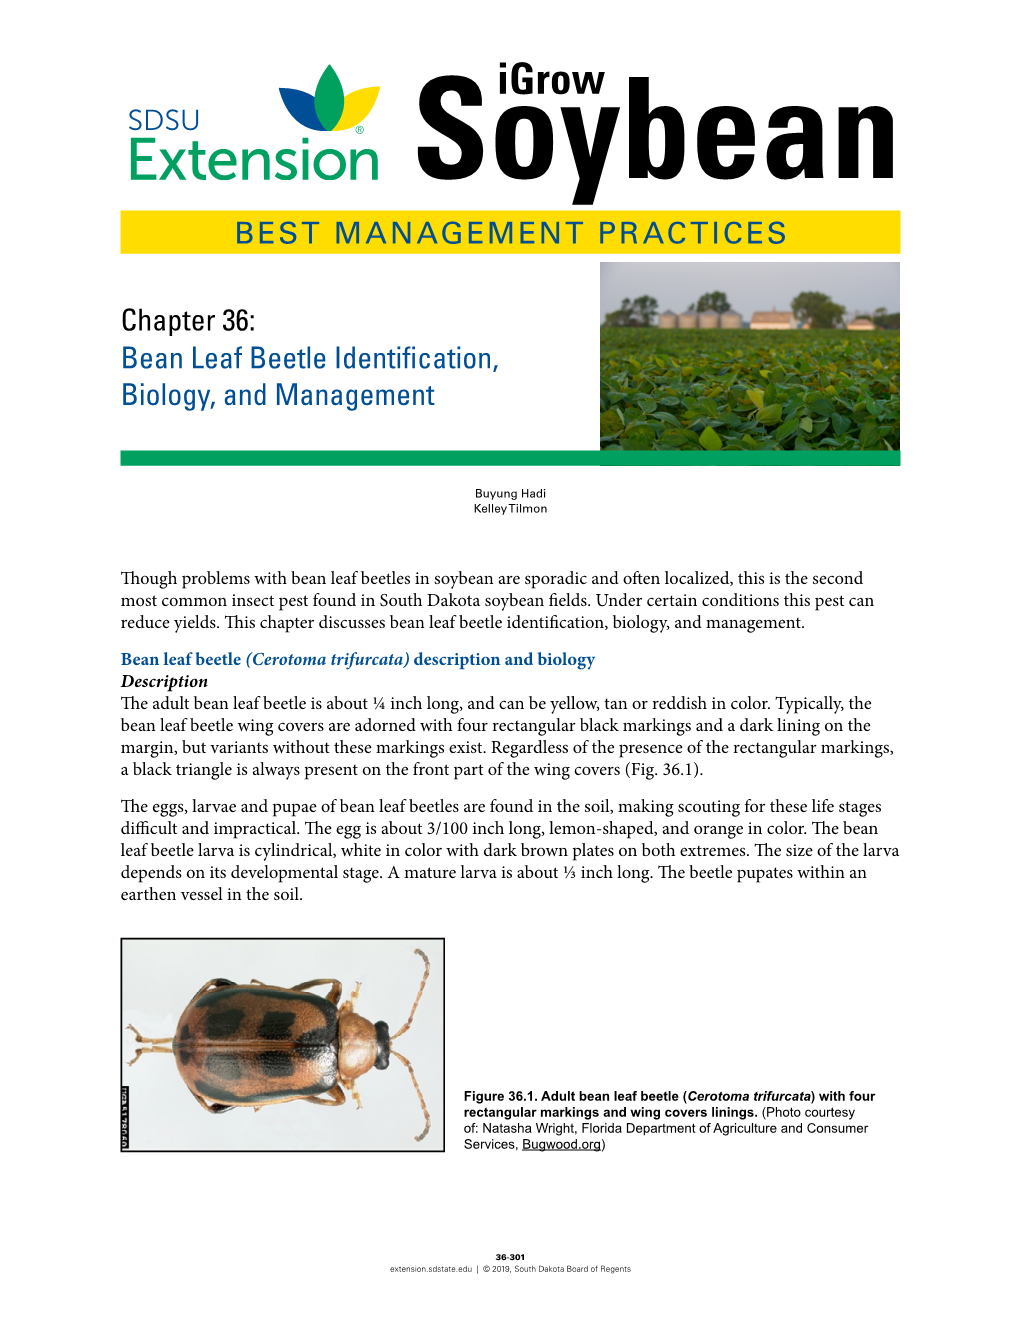 Bean Leaf Beetle Identification, Biology, and Management